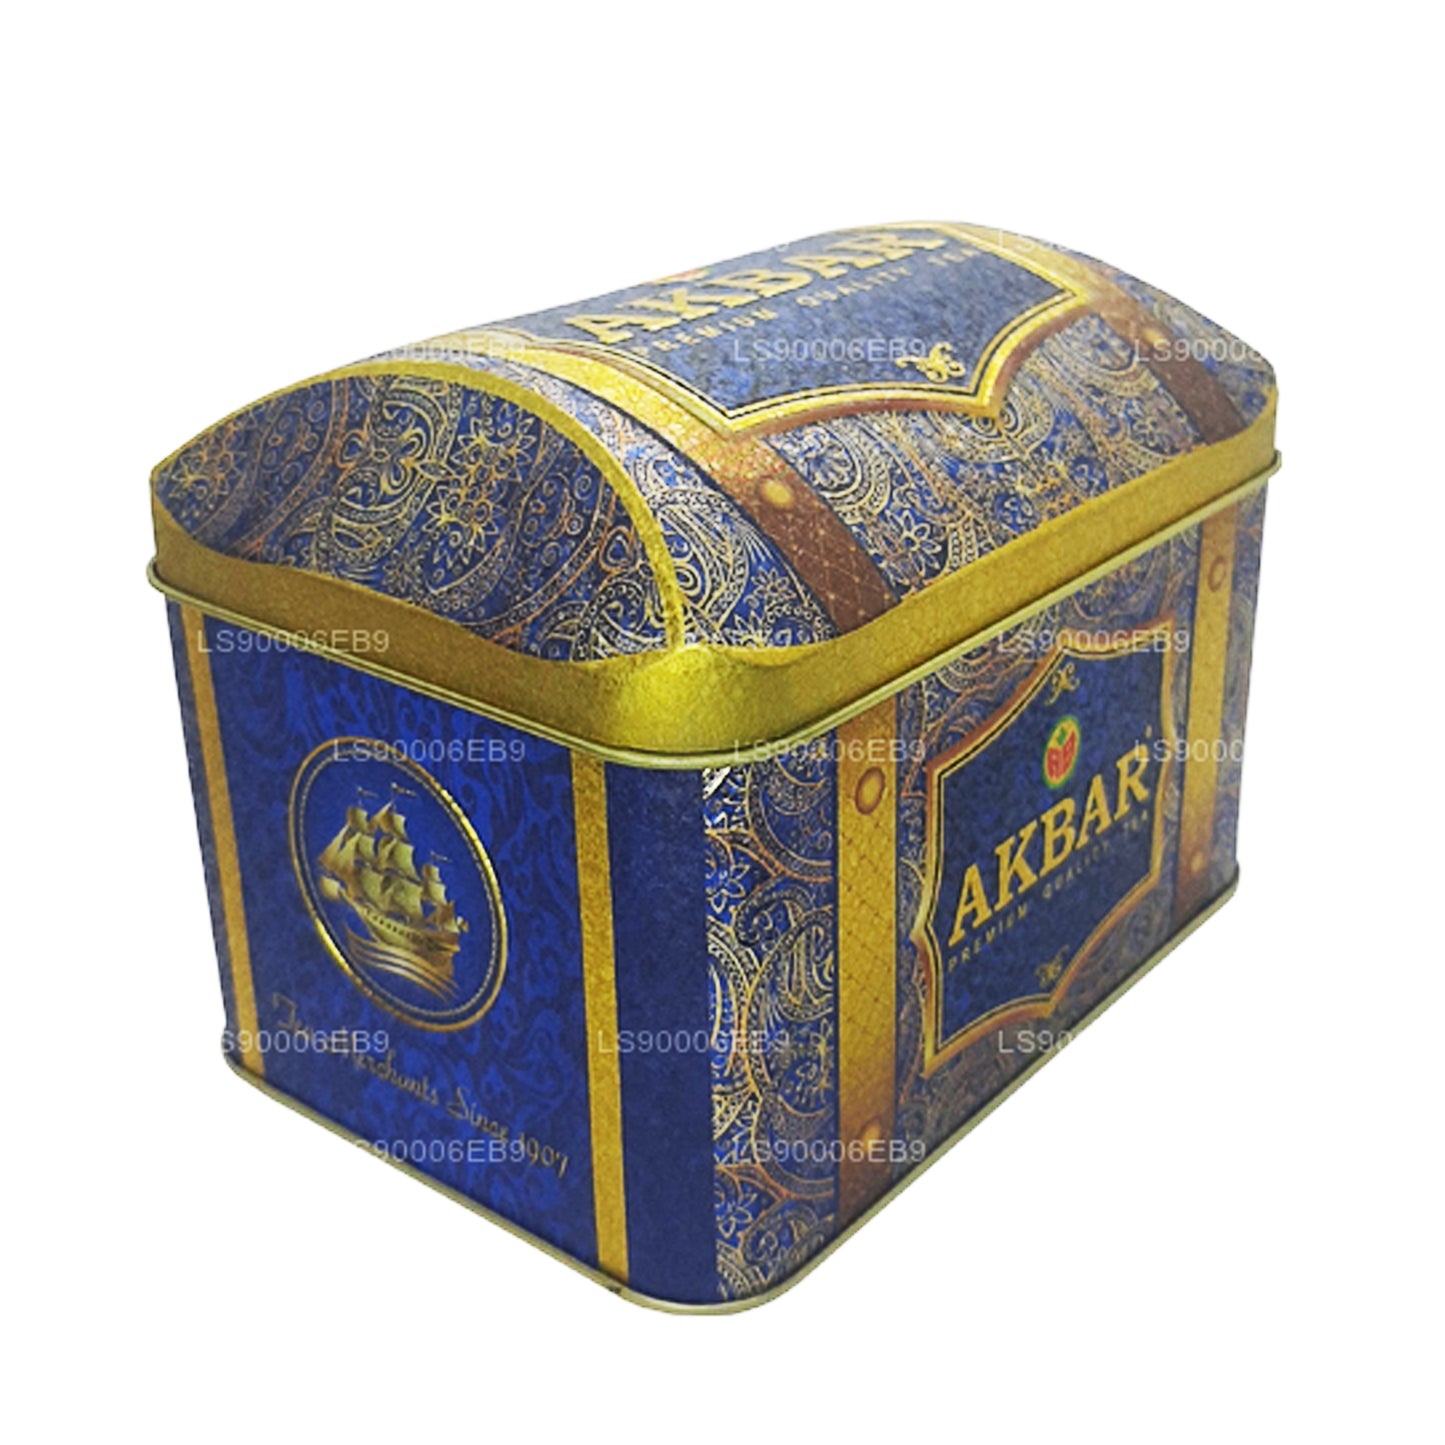 Akbar 独家系列东方神秘宝盒 (250 克)